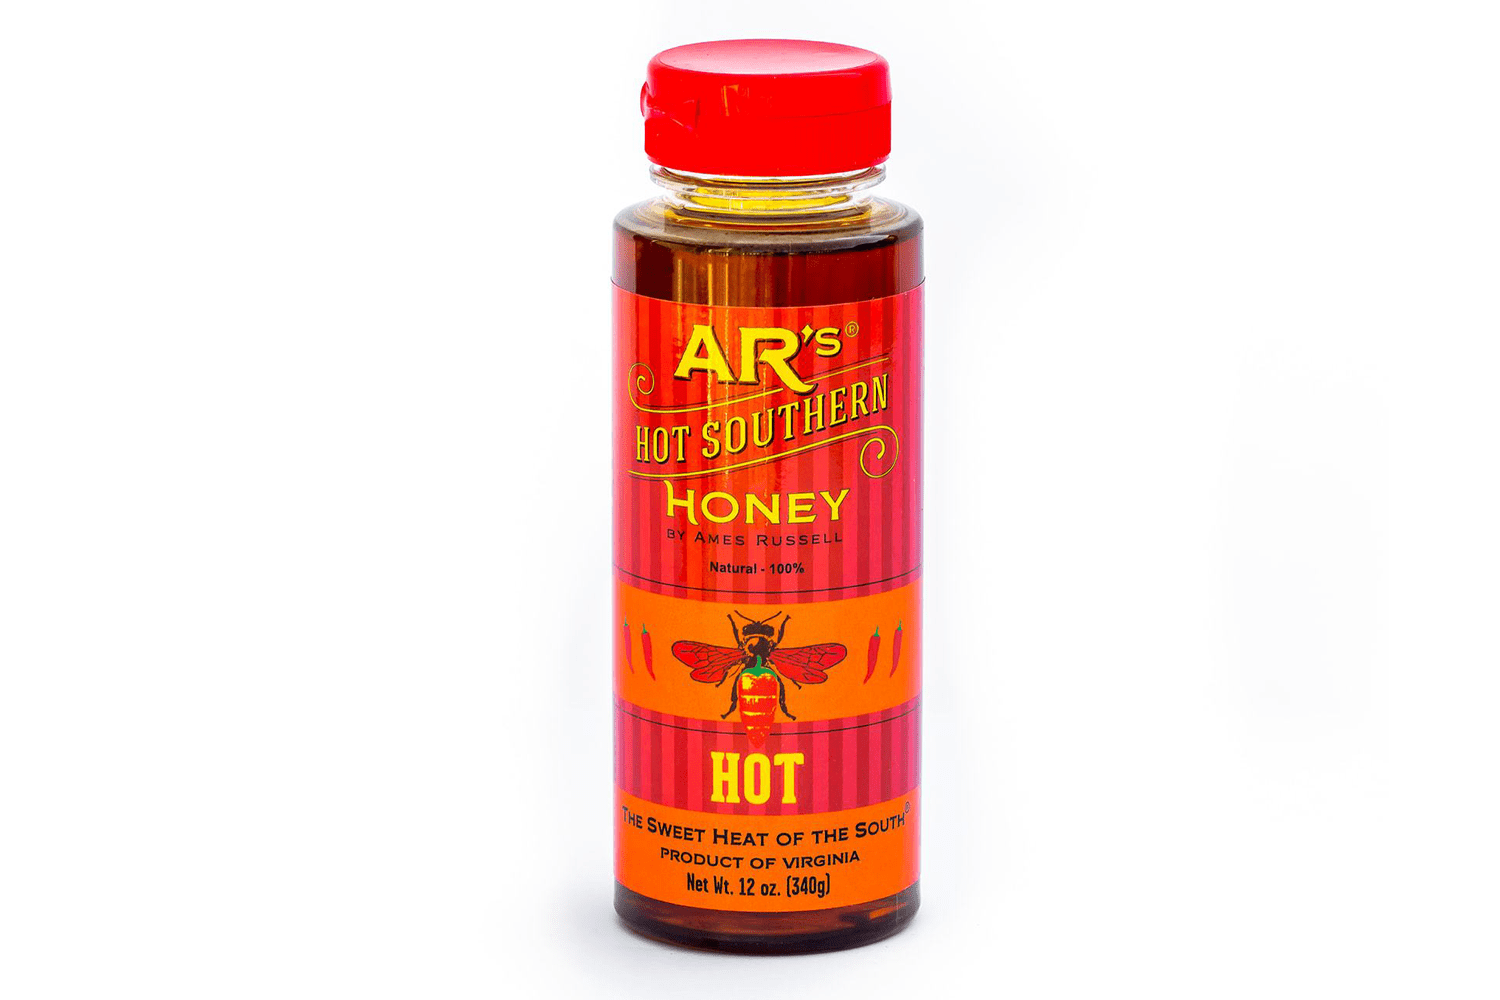 AR's Hot-Hot Southern Honey